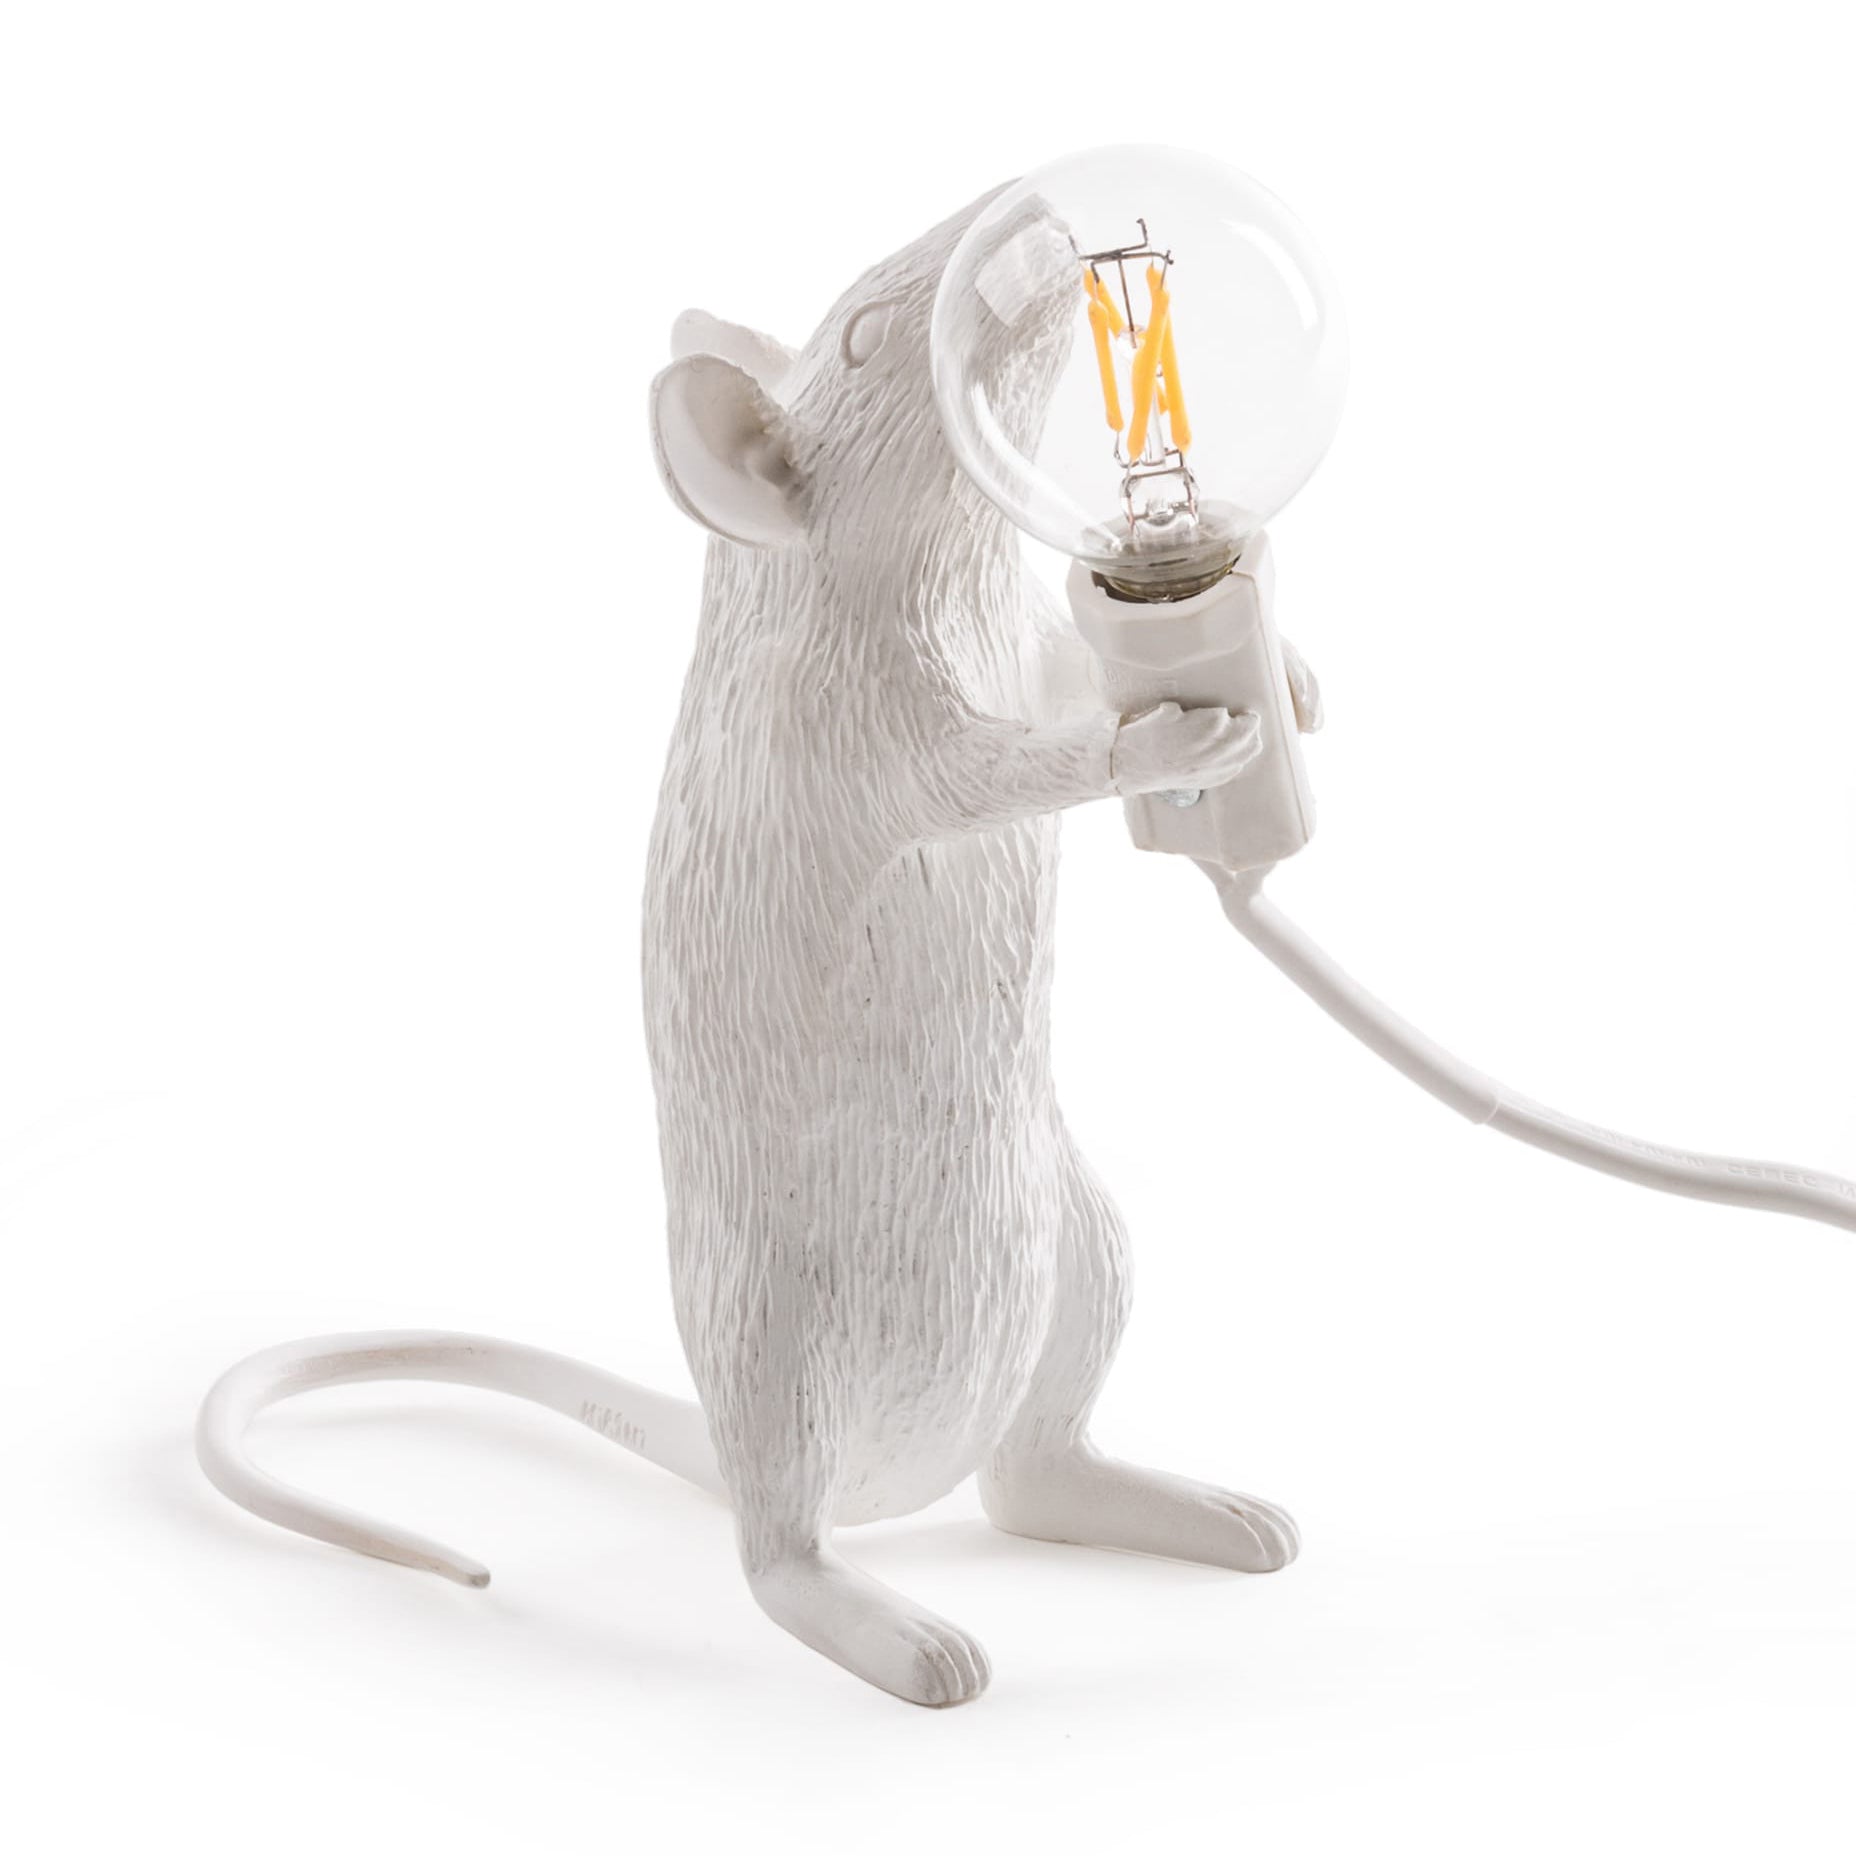 verwijzen Blootstellen onderschrift Seletti Mouse Standing Lamp - 2Modern